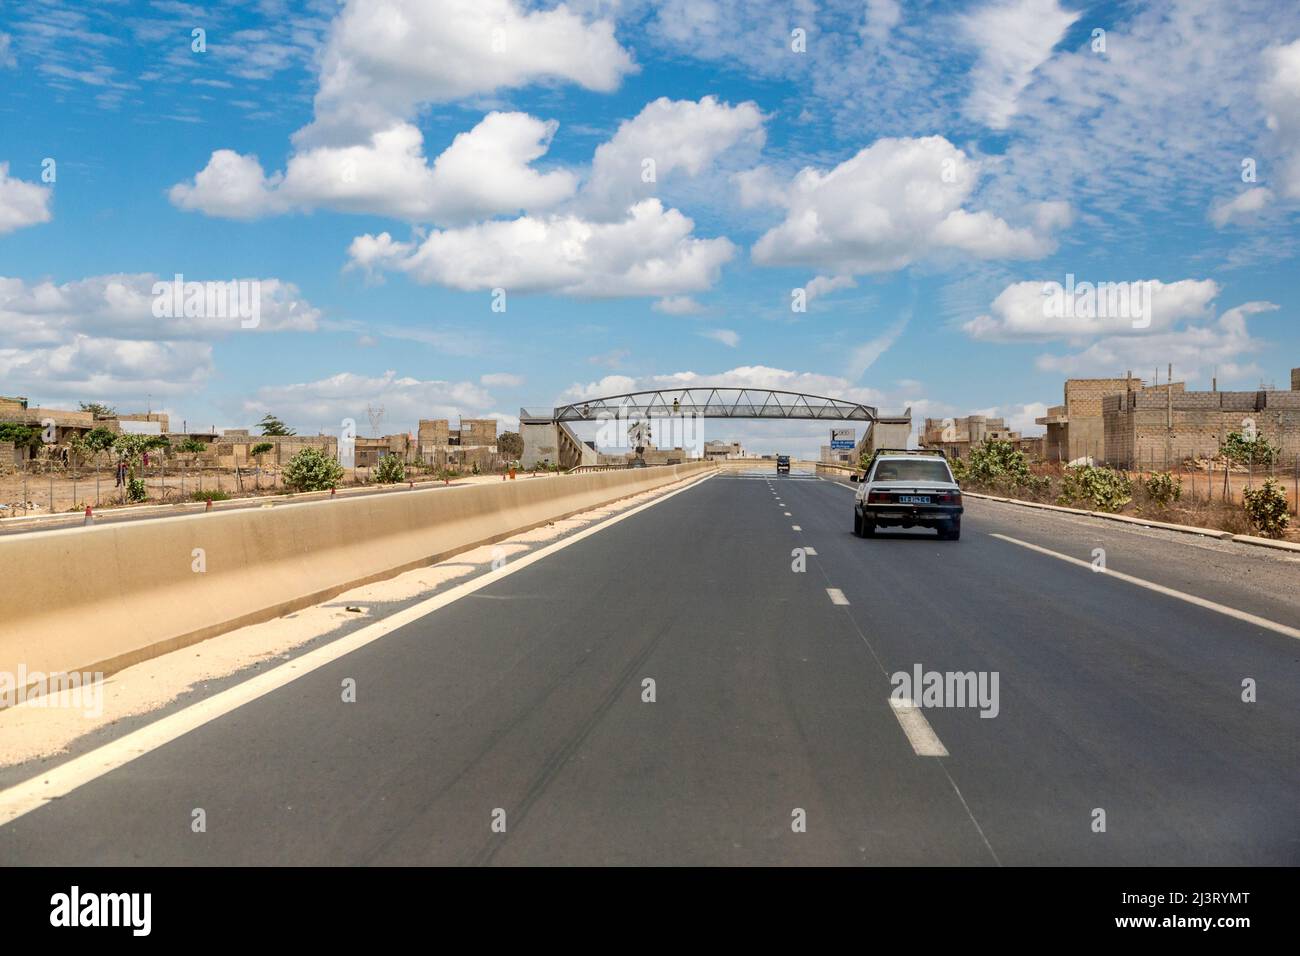 Moderna autostrada divisa a quattro corsie vicino a Dakar, Senegal. Ponte pedonale in distanza. Foto Stock